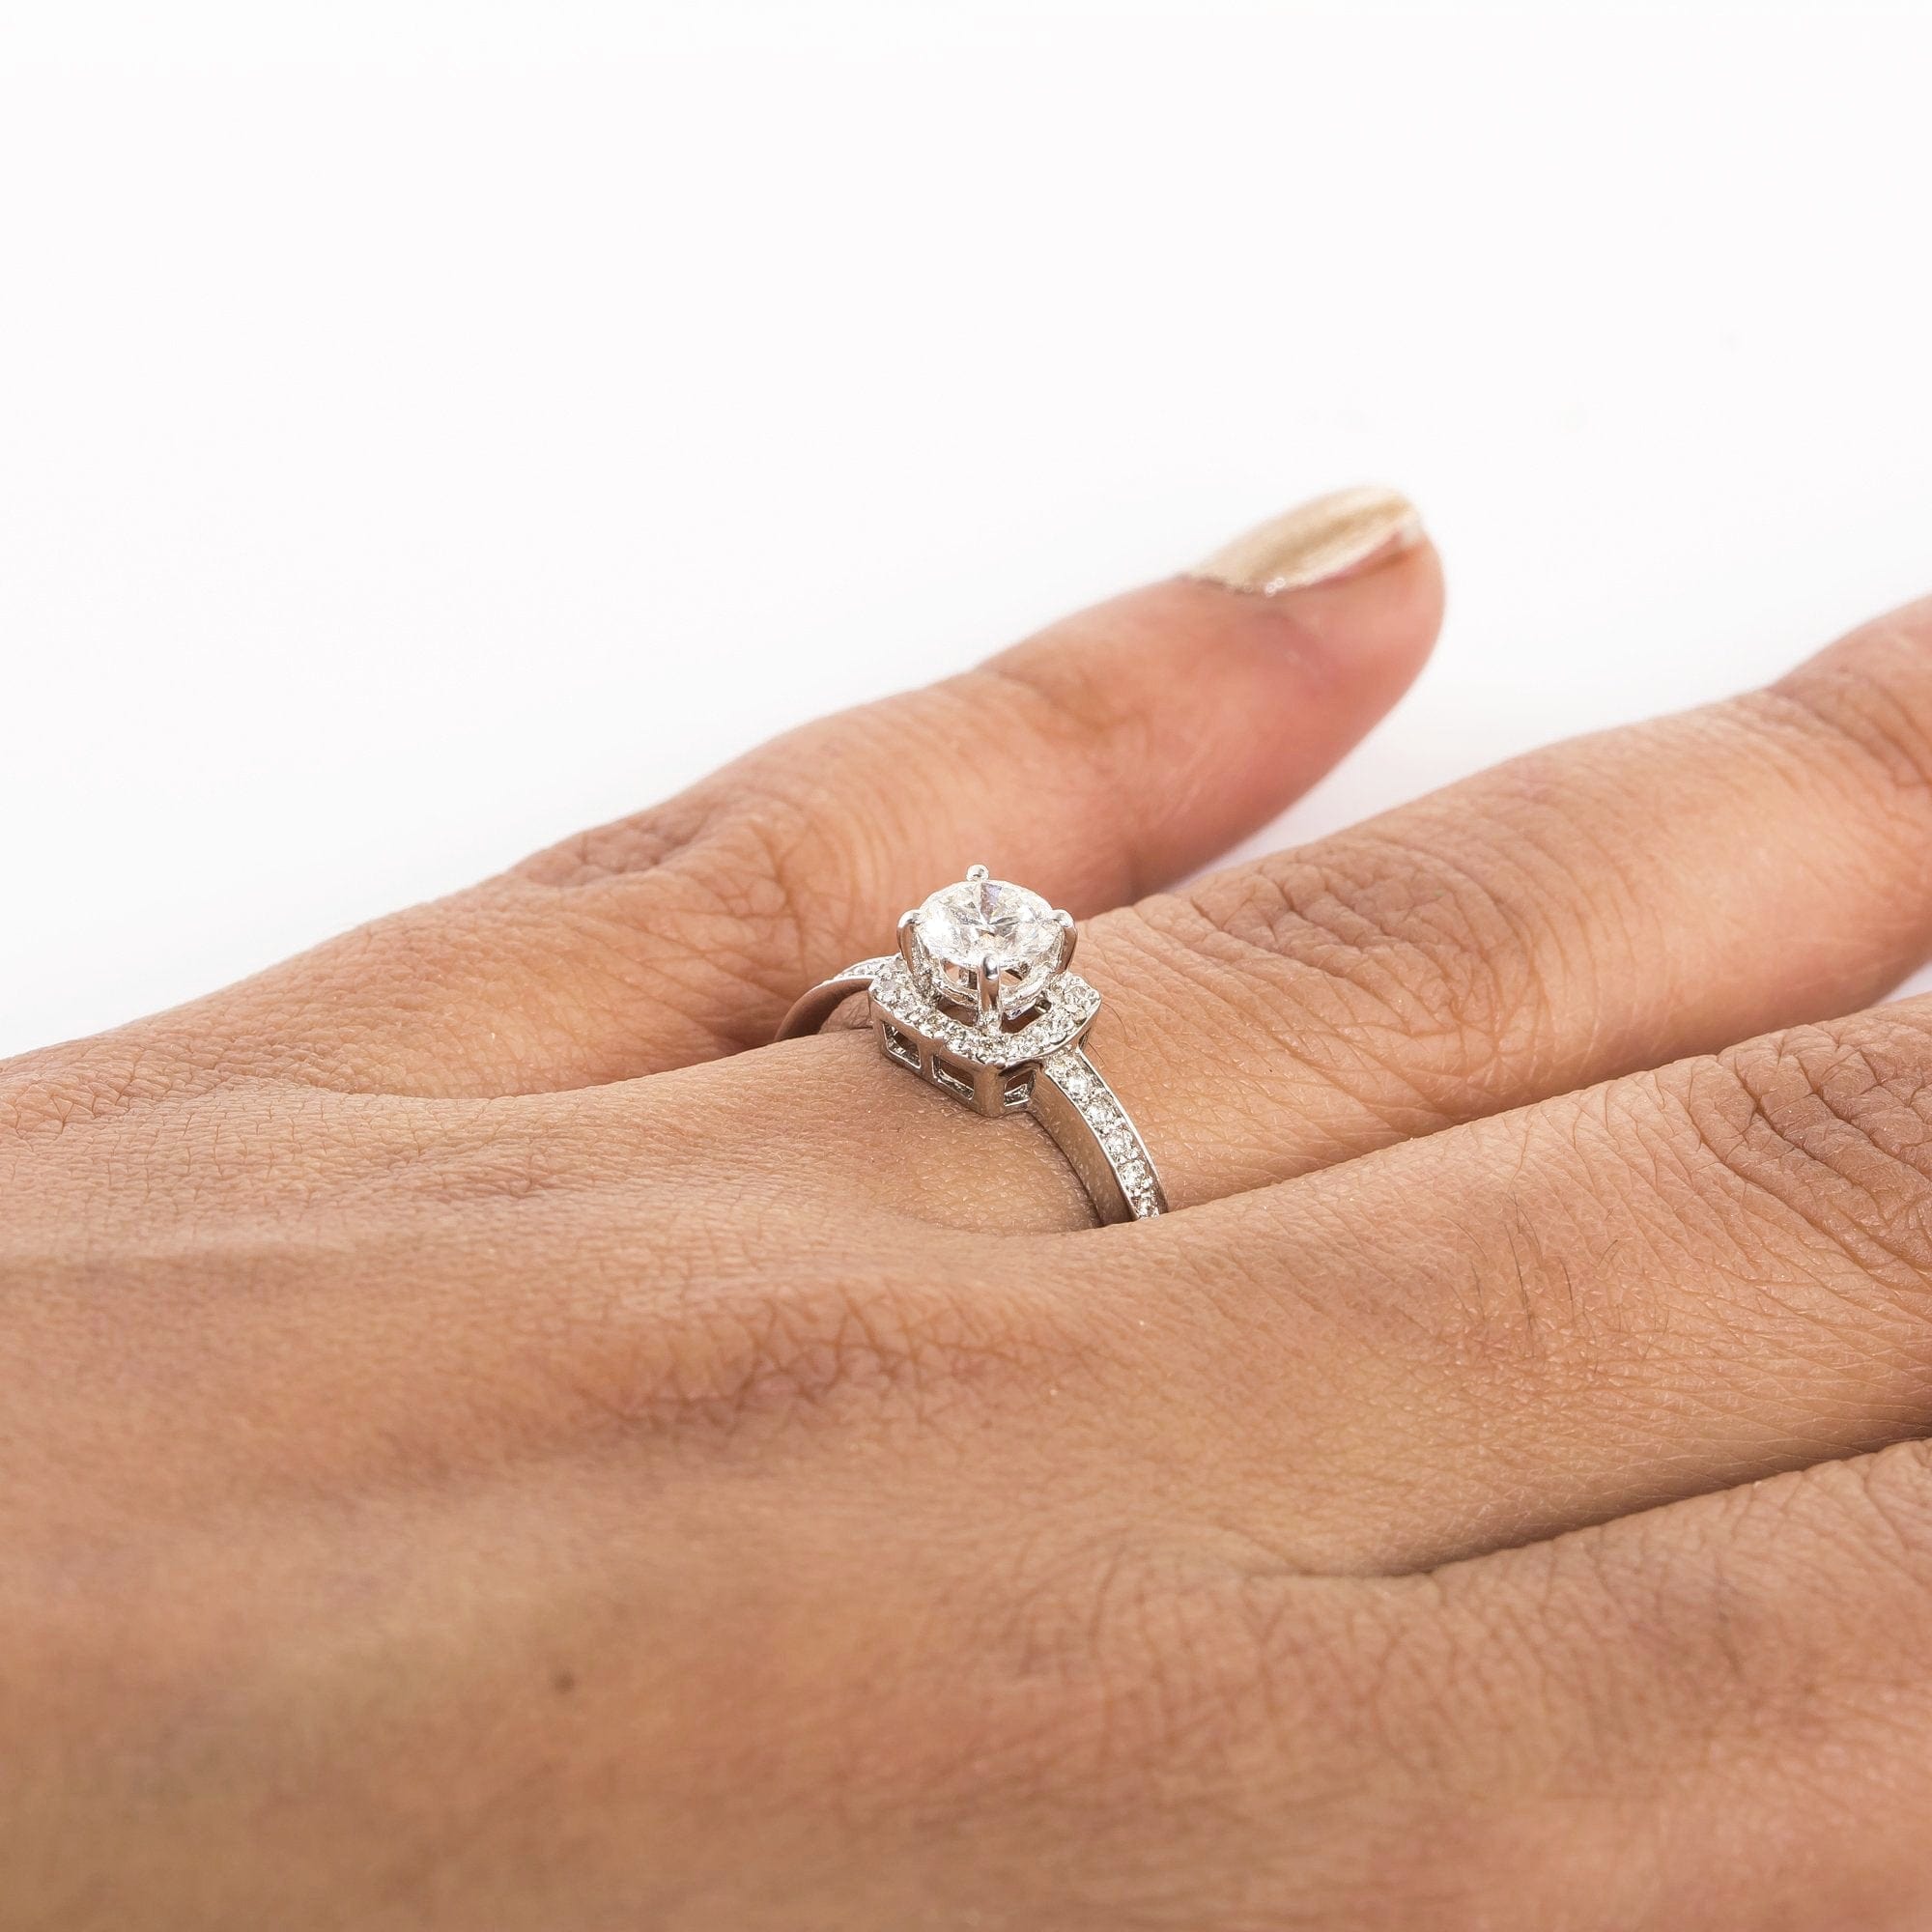 Diamond Ring on Woman Finger Stock Image - Image of gold, caucasian:  80123297